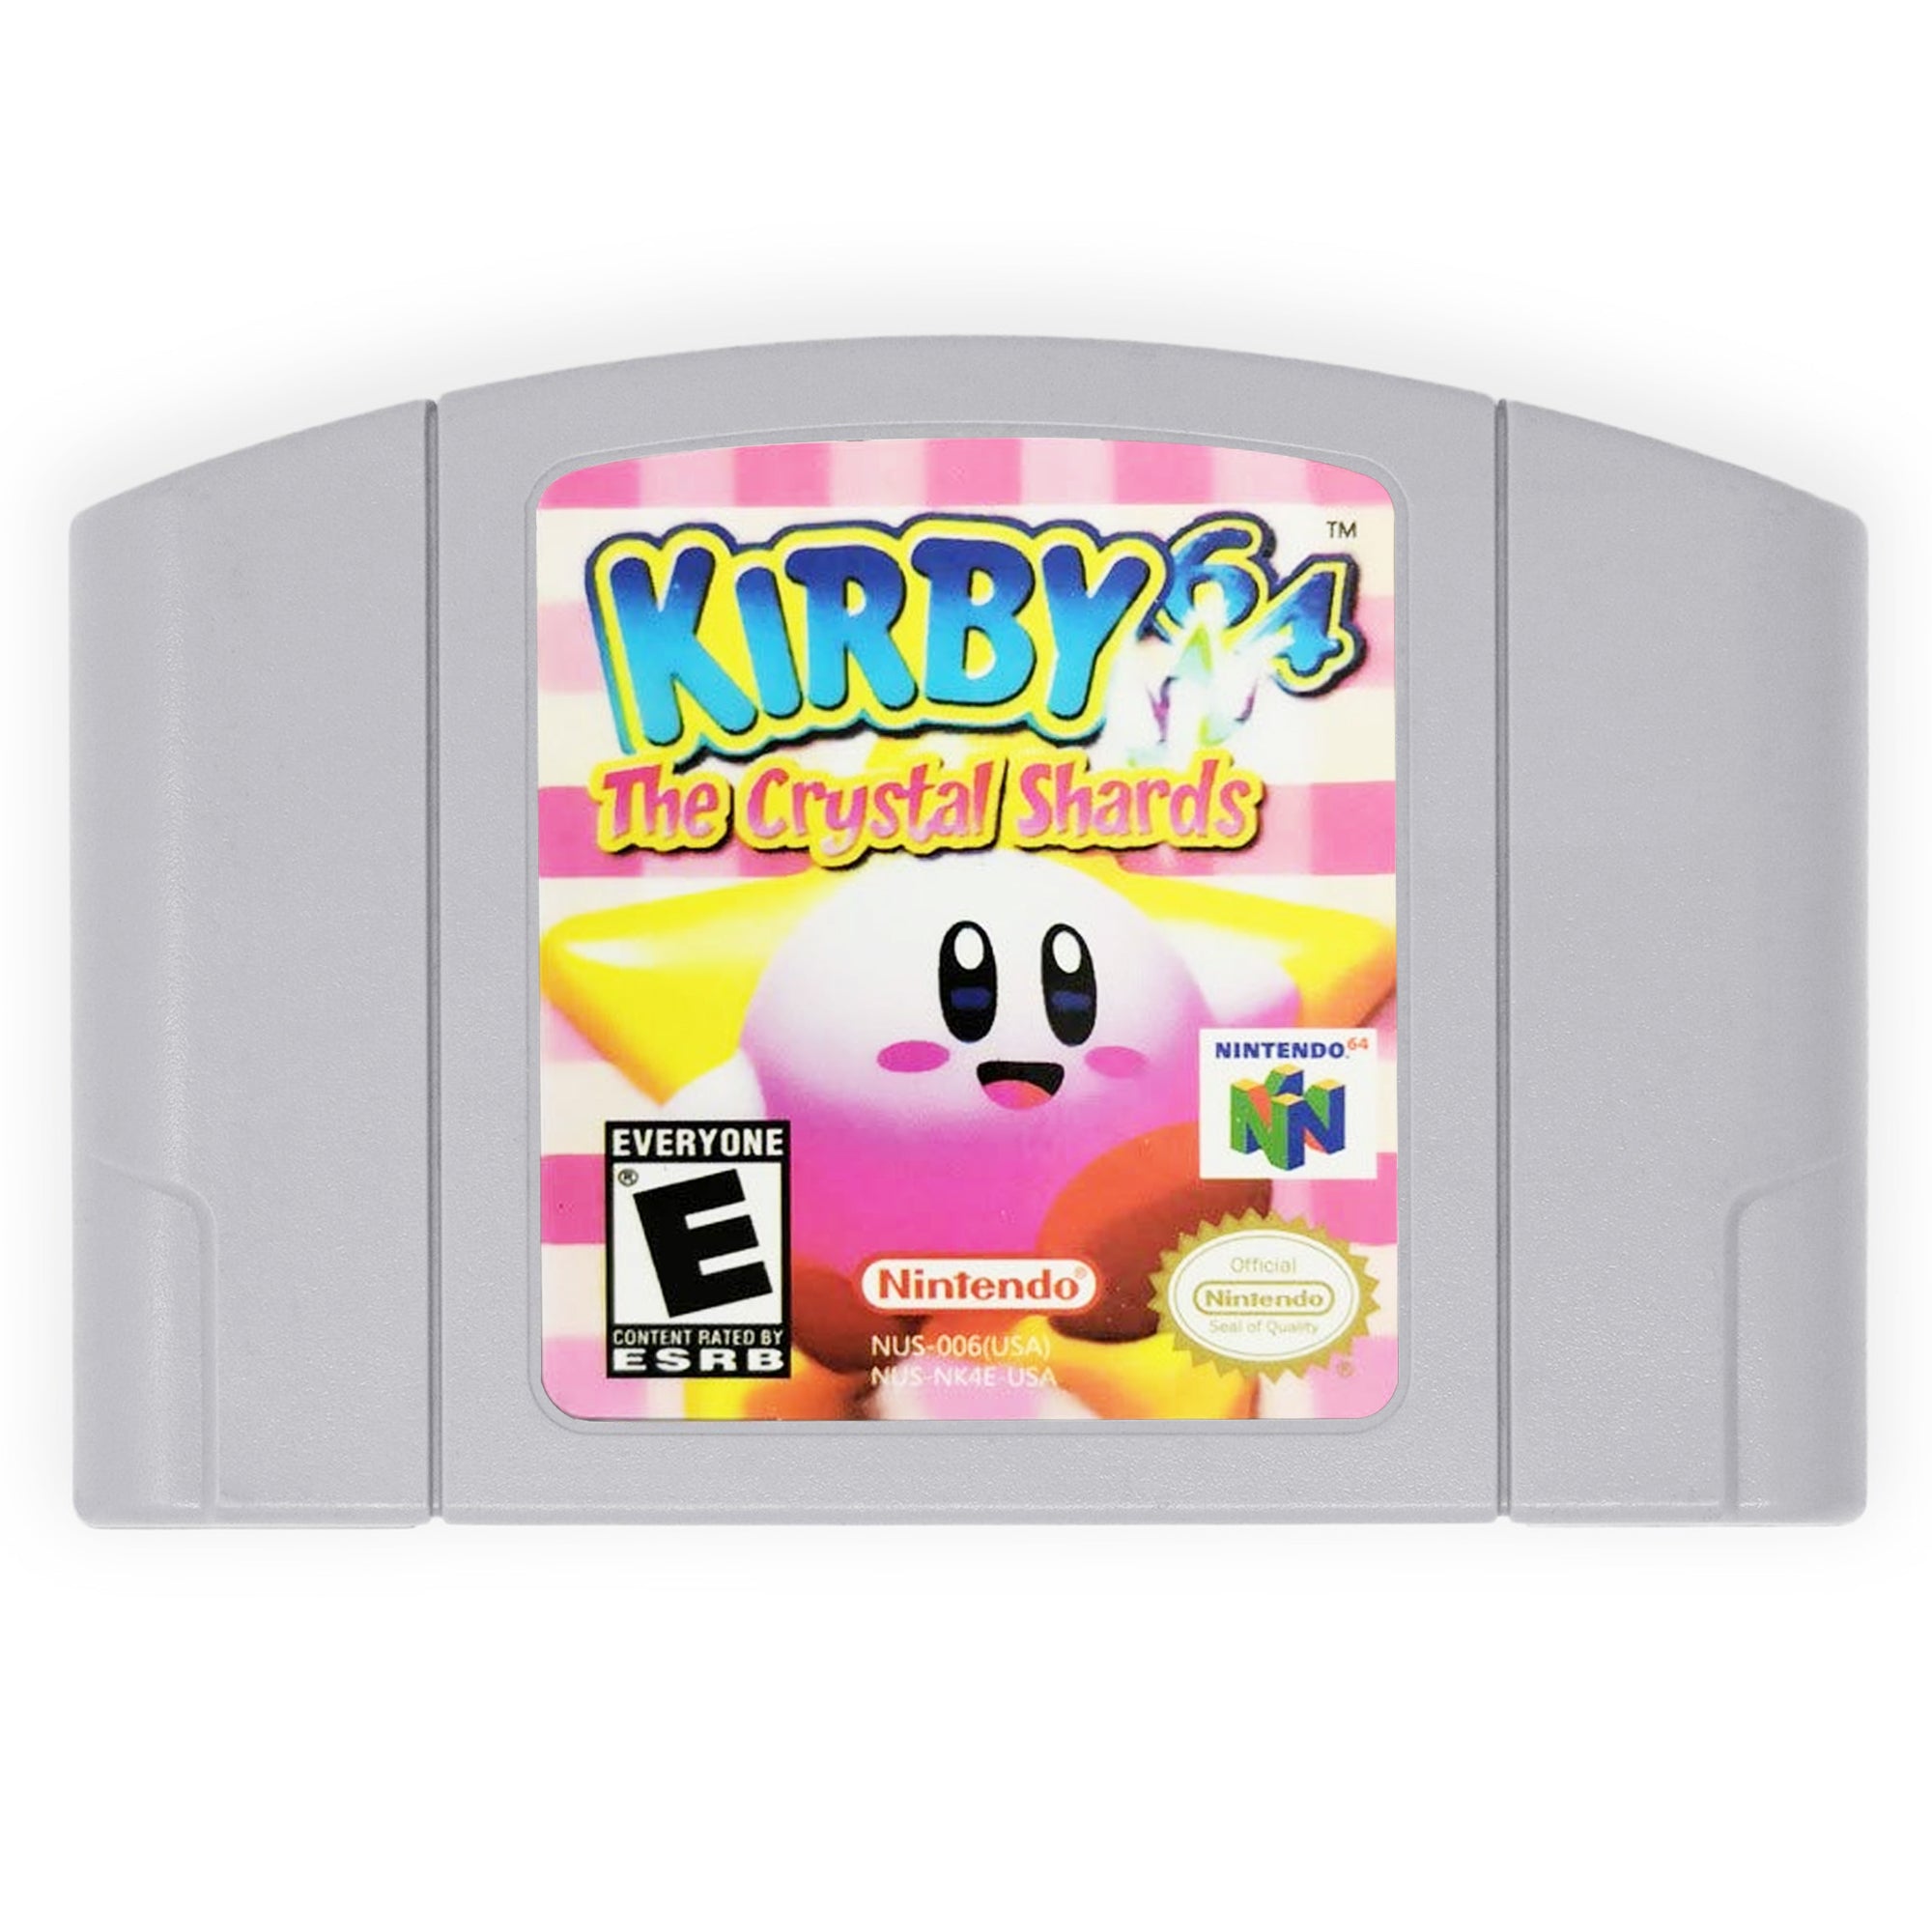 Nintendo 64 N64 Game Card Cartridge Console US Version - Kirby 64